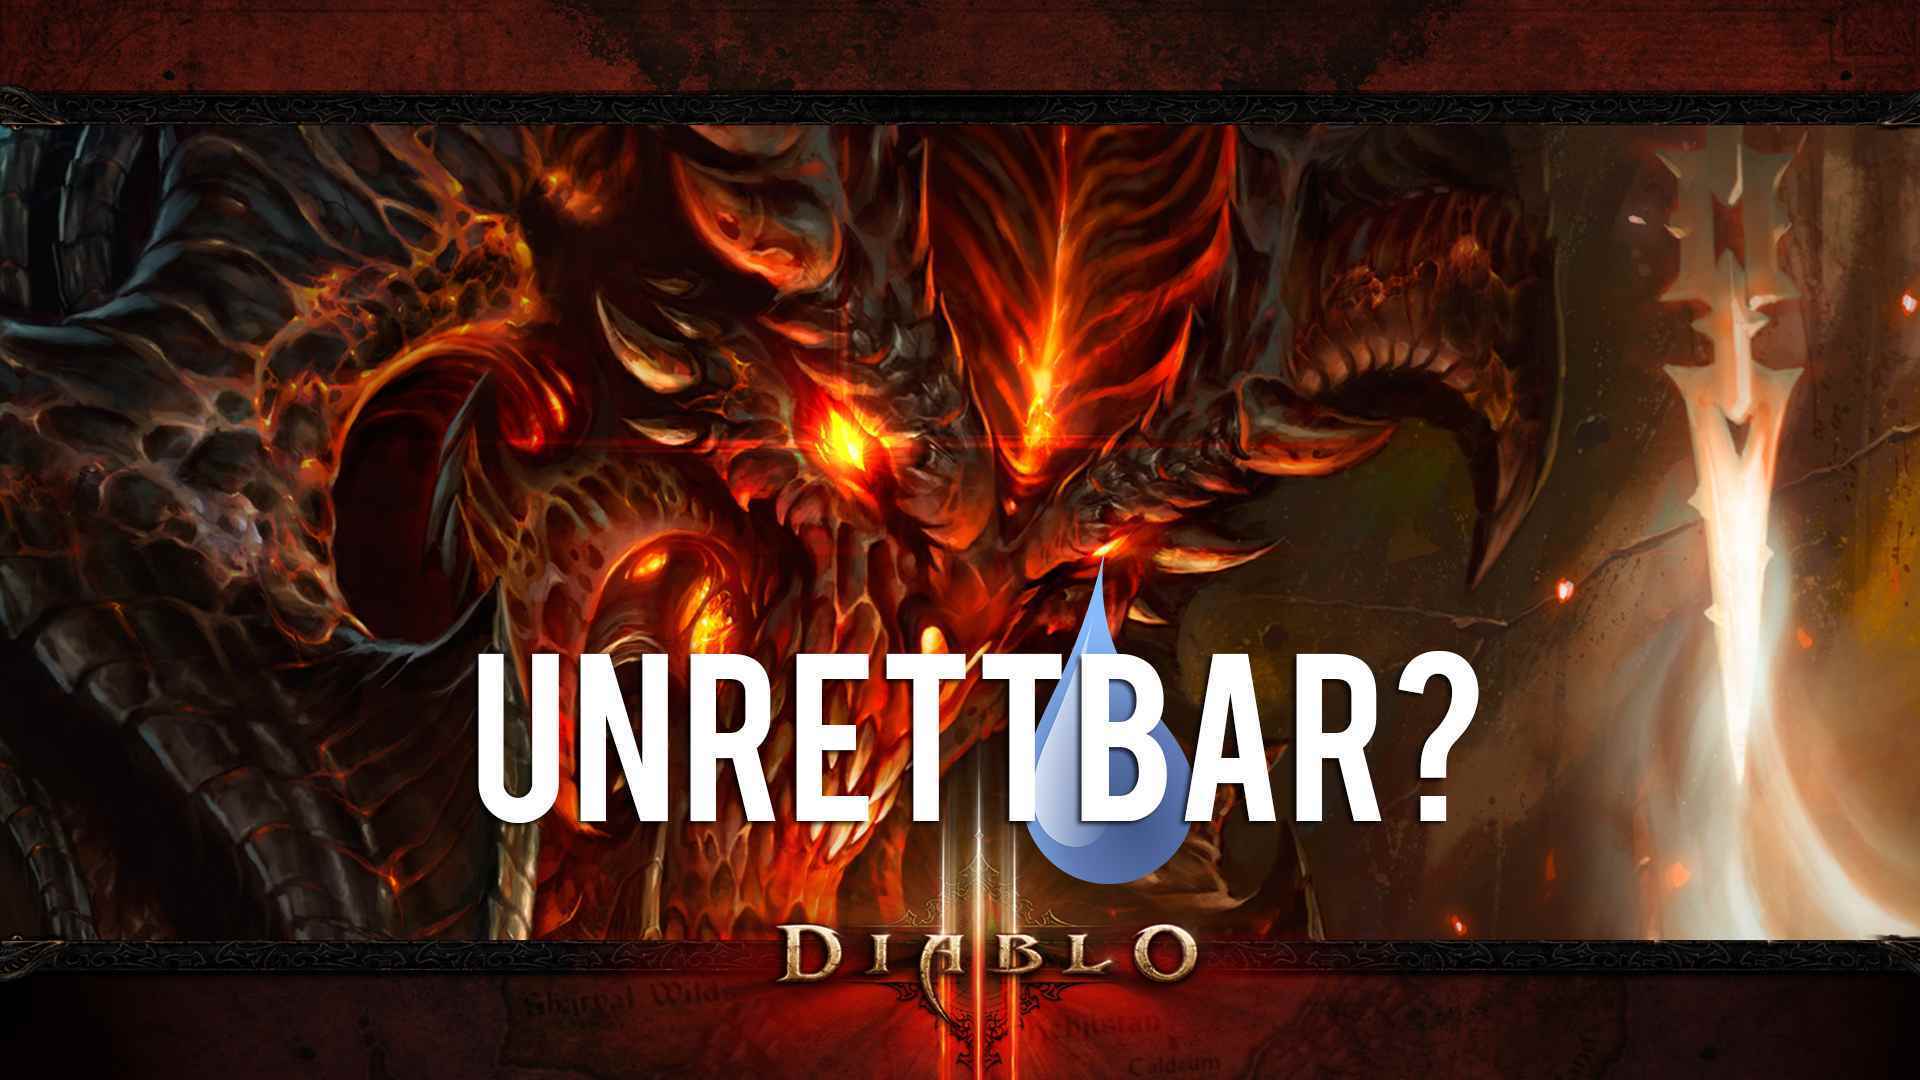 Diablo 3 fÃ¼r Firmenchef unrettbar - Diablo 4 in den StartlÃ¶chern?